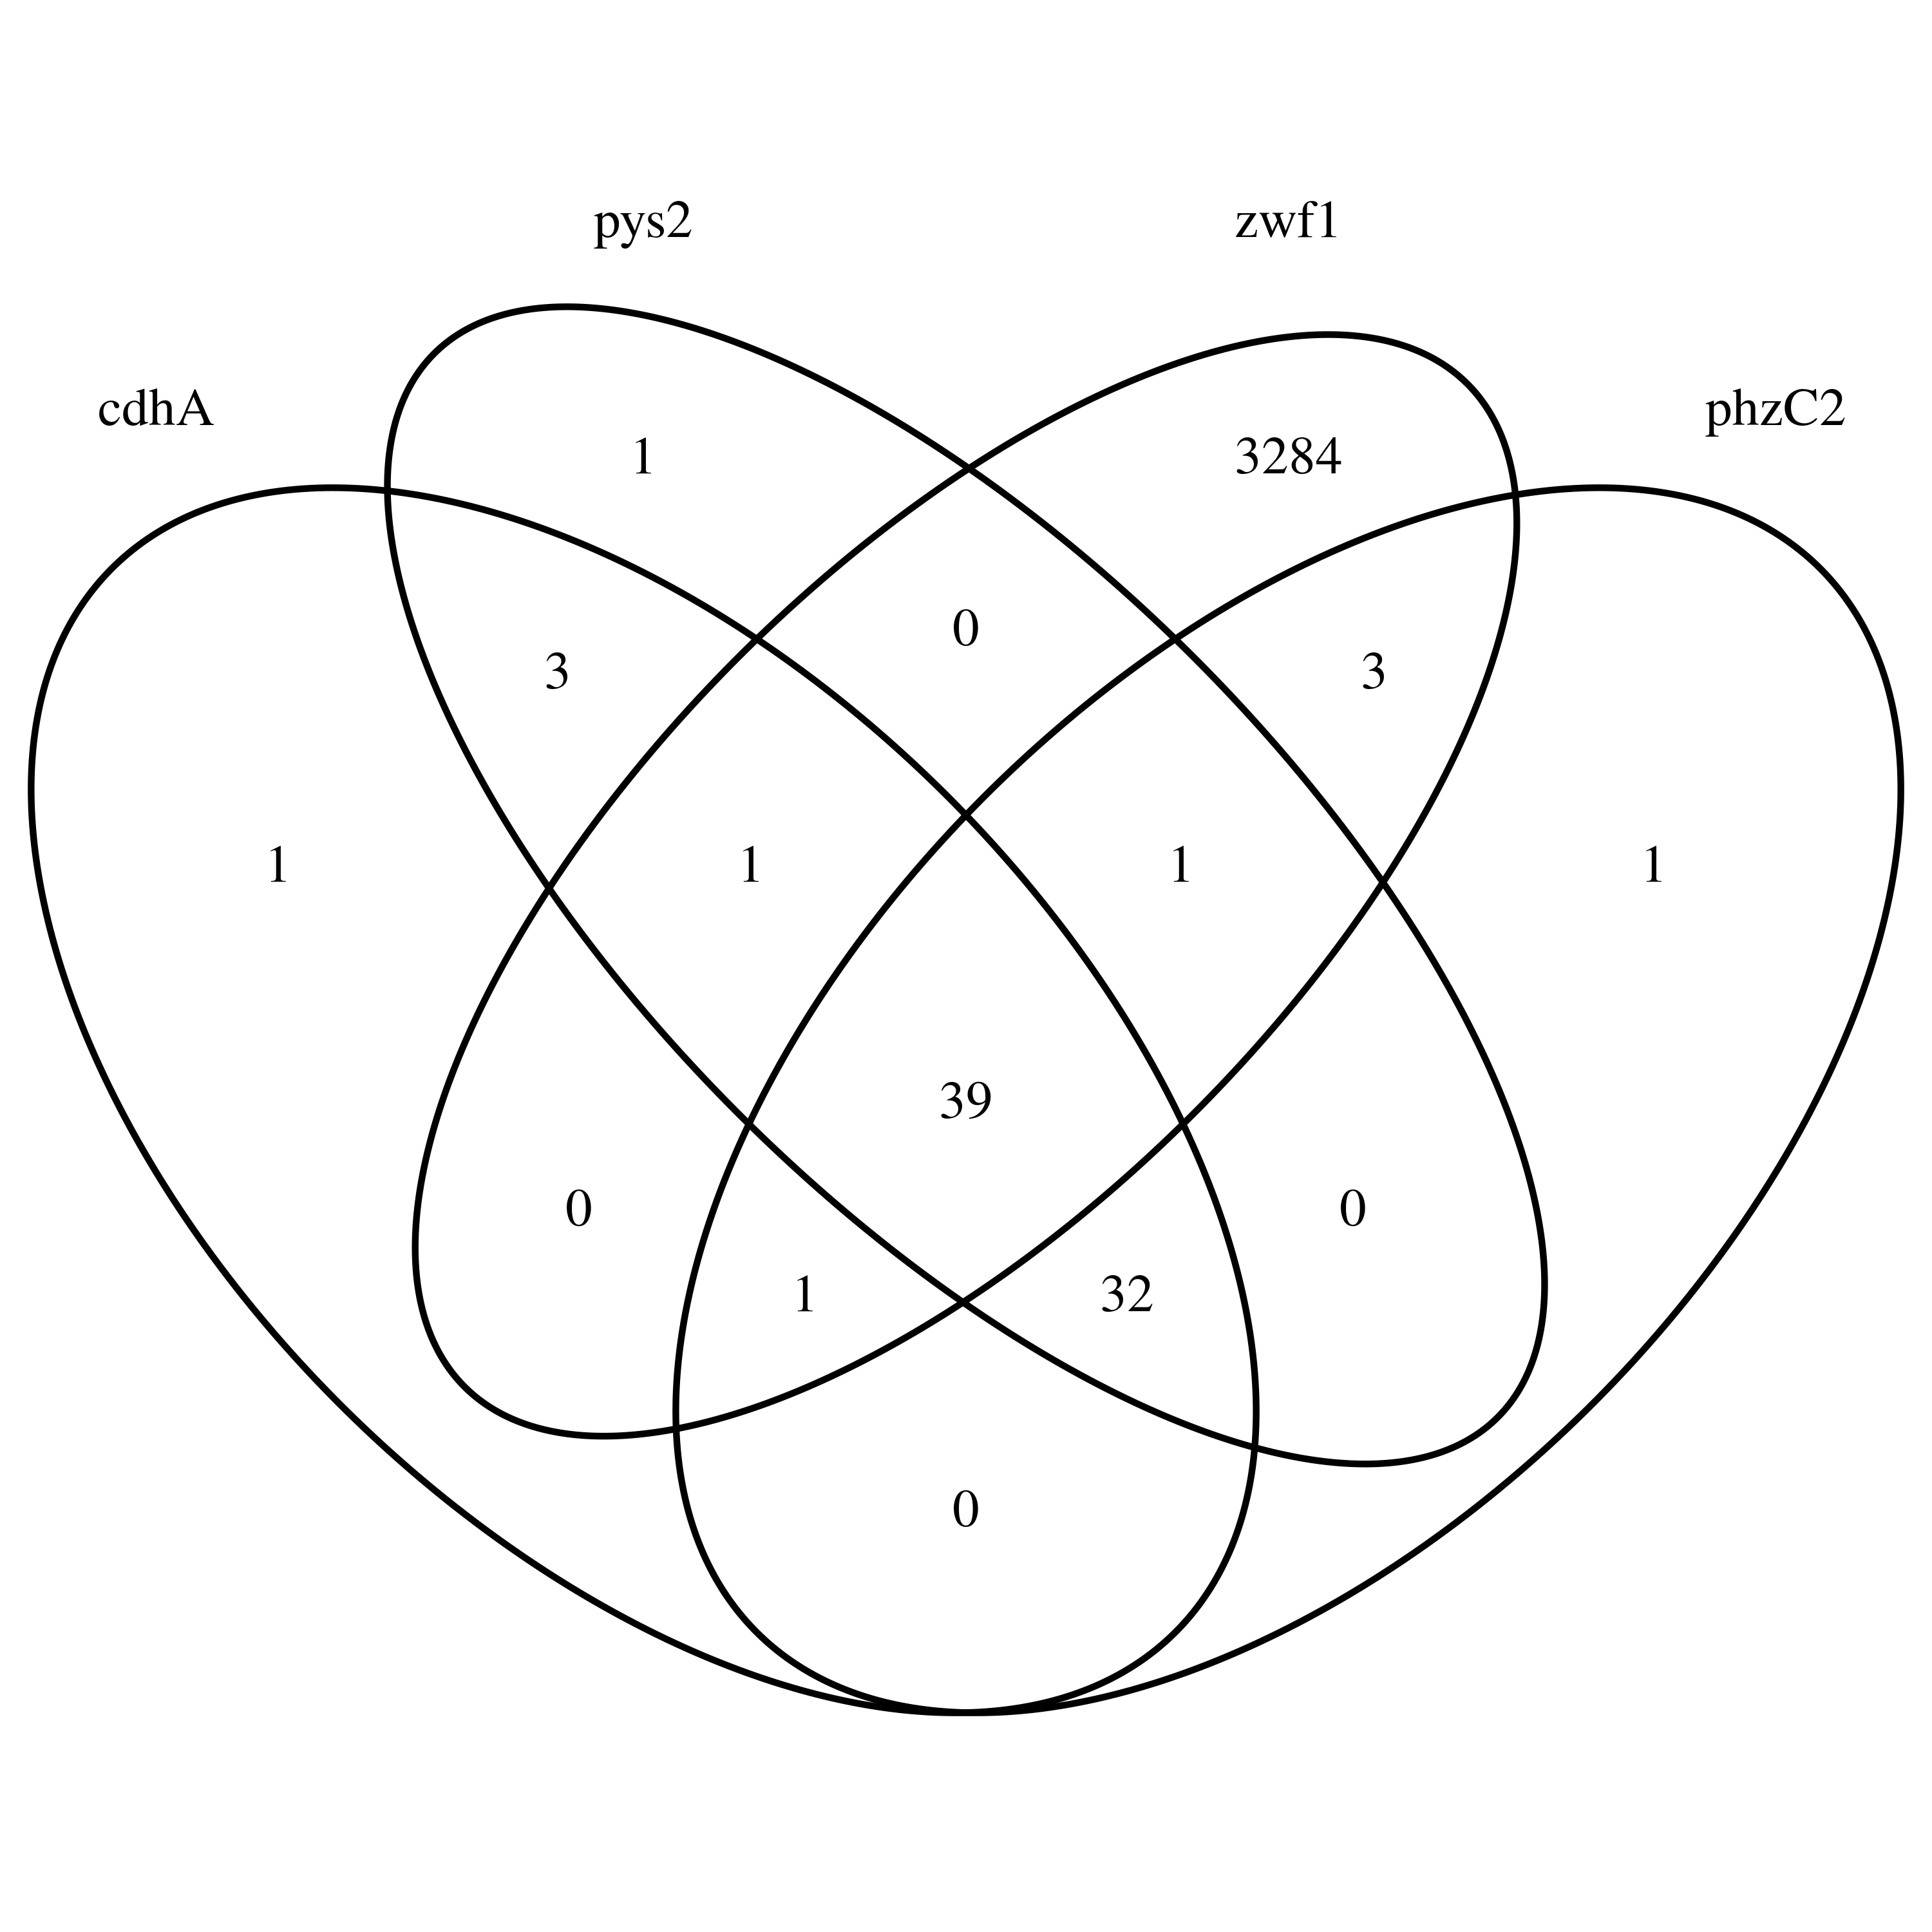 Venn diagram of zwf1, cdhA, phzC2 and pys2